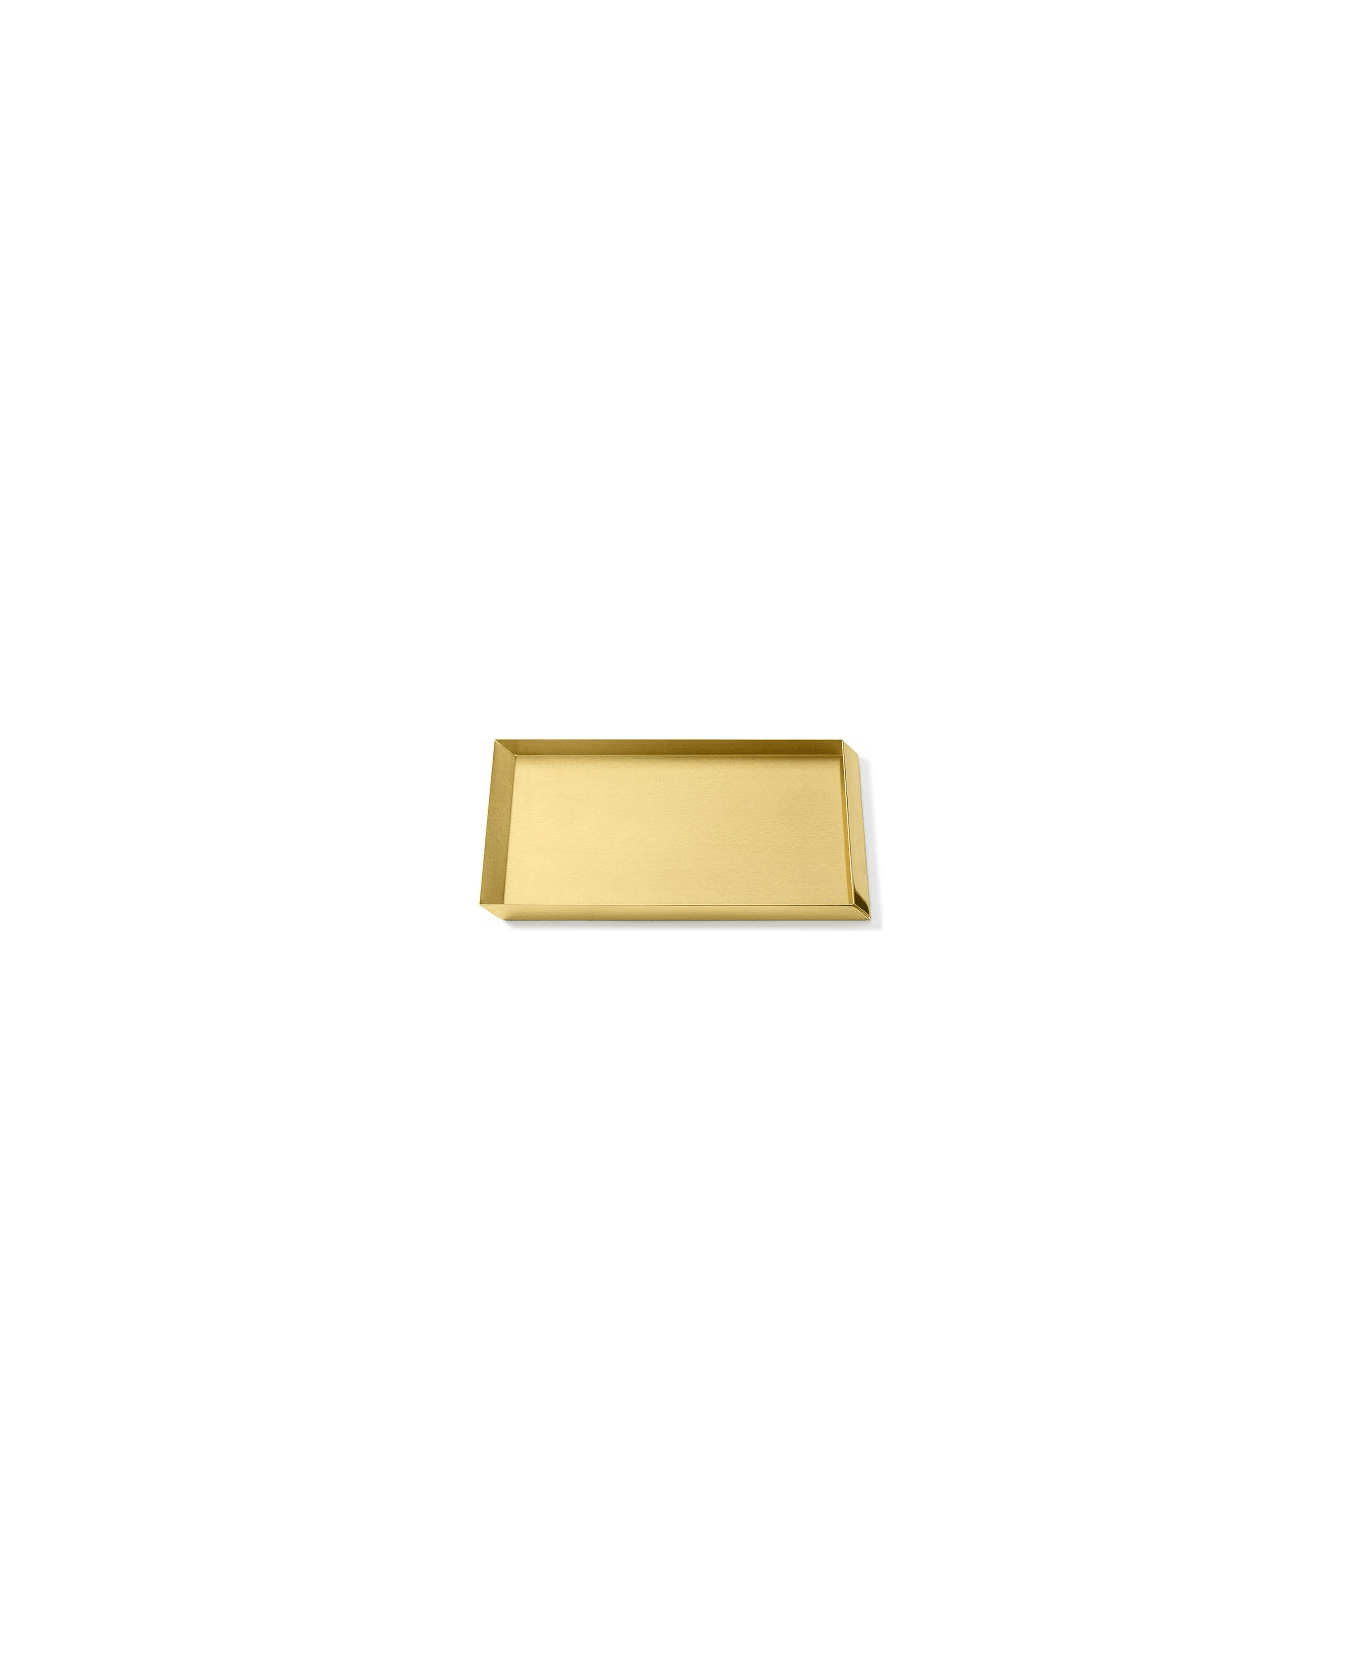 Ghidini 1961 Axonometry - A4 Tray Polished Brass - Polished brass